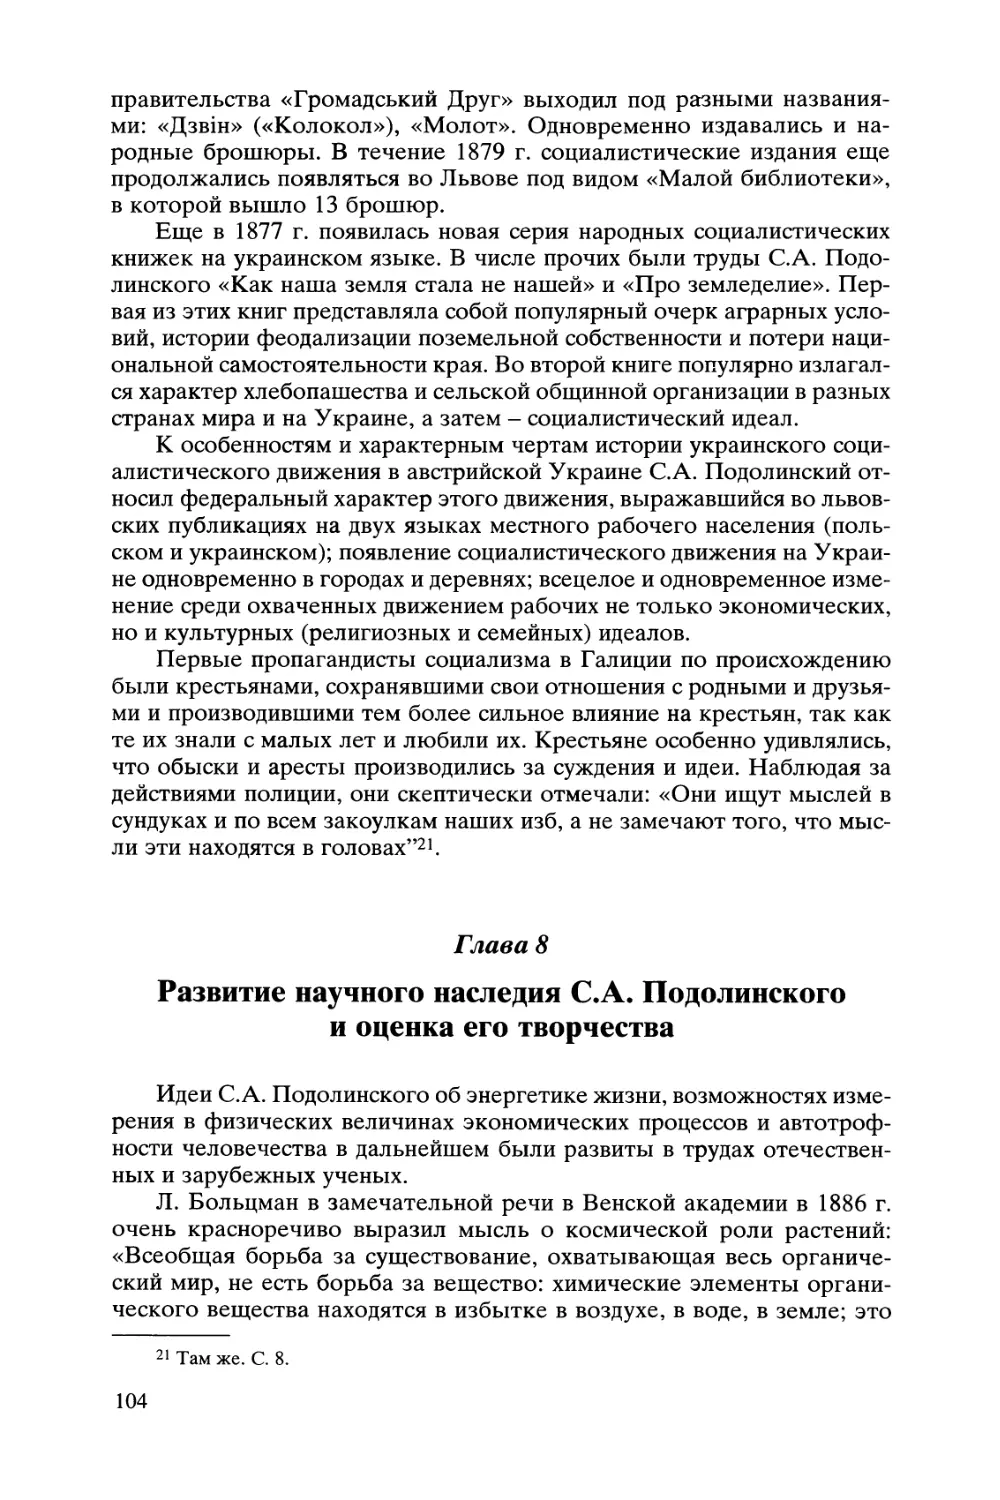 Глава 8. Развитие научного наследия С.А. Подолинского и оценка его творчества